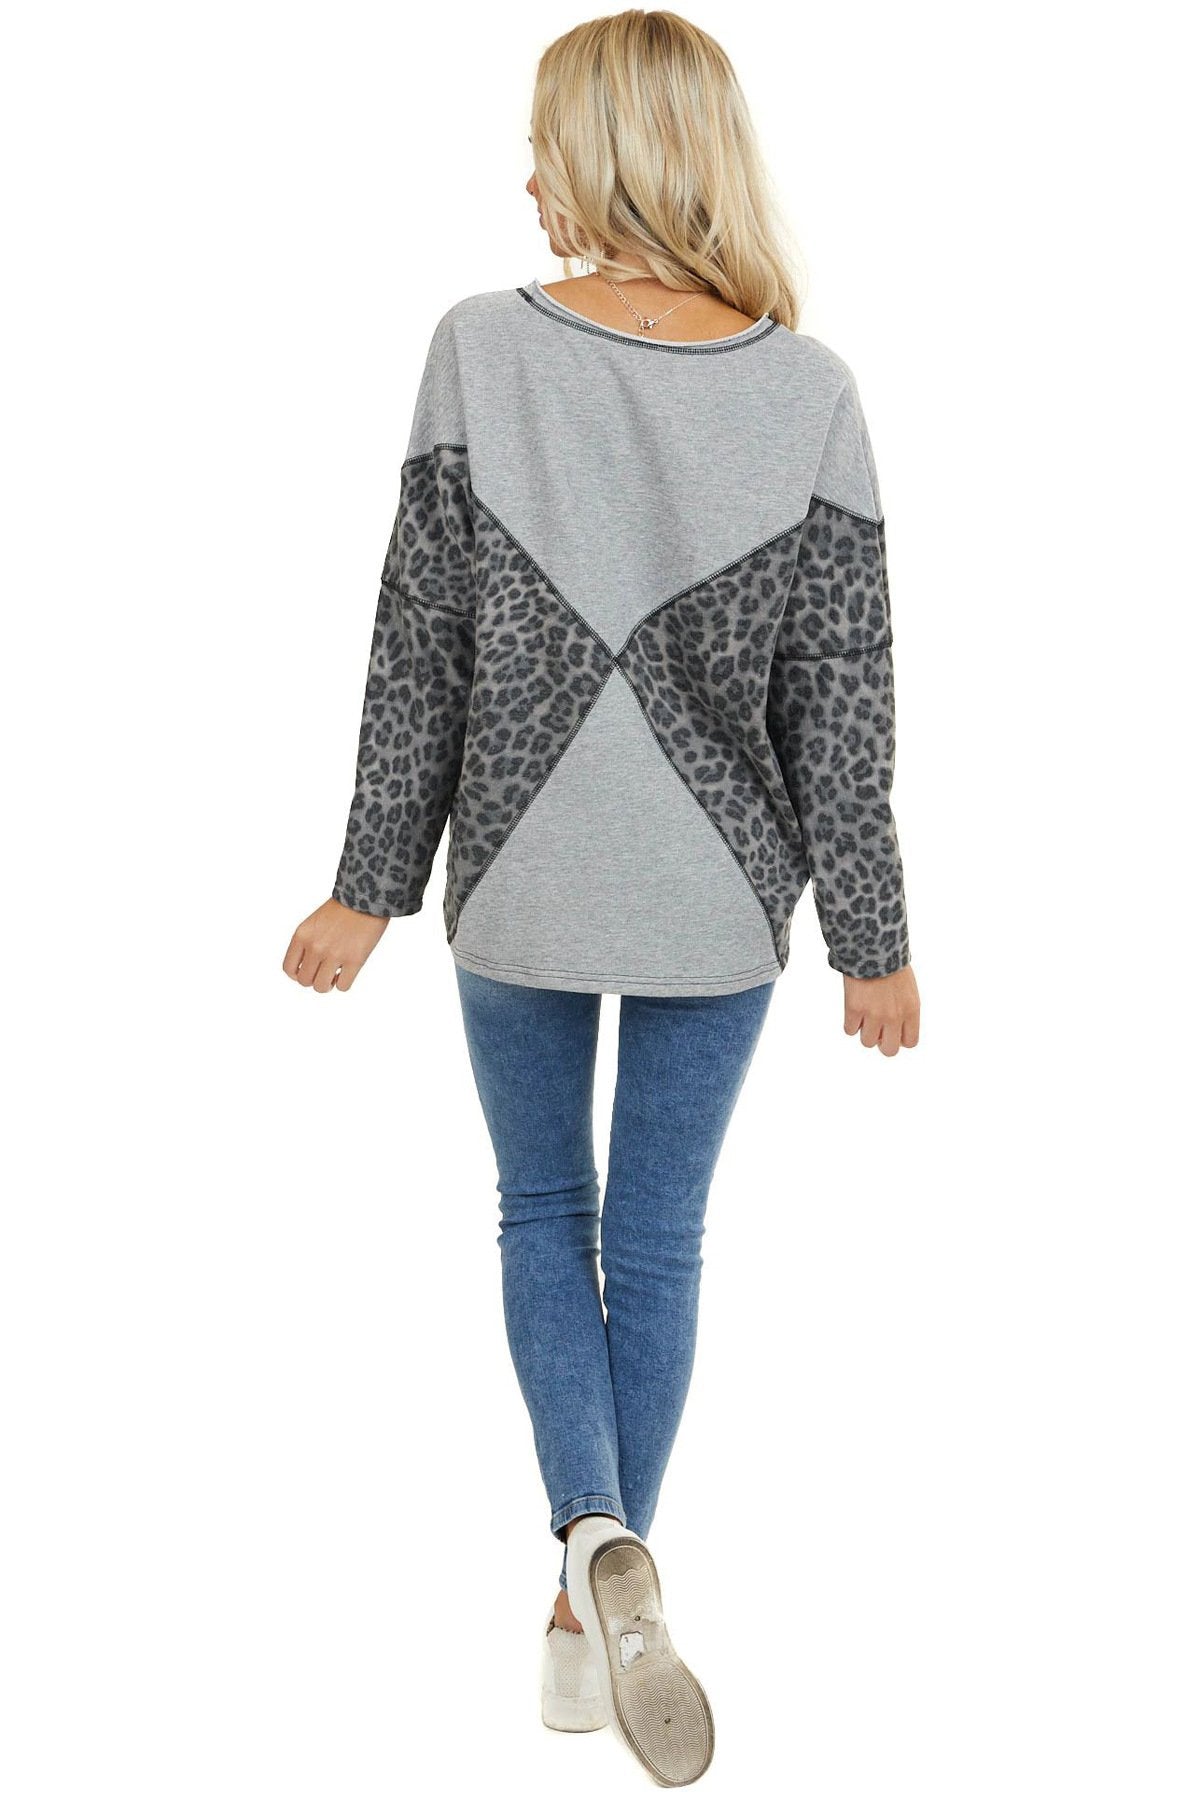 Women Lepoard Print Fall Sweater Hoodies